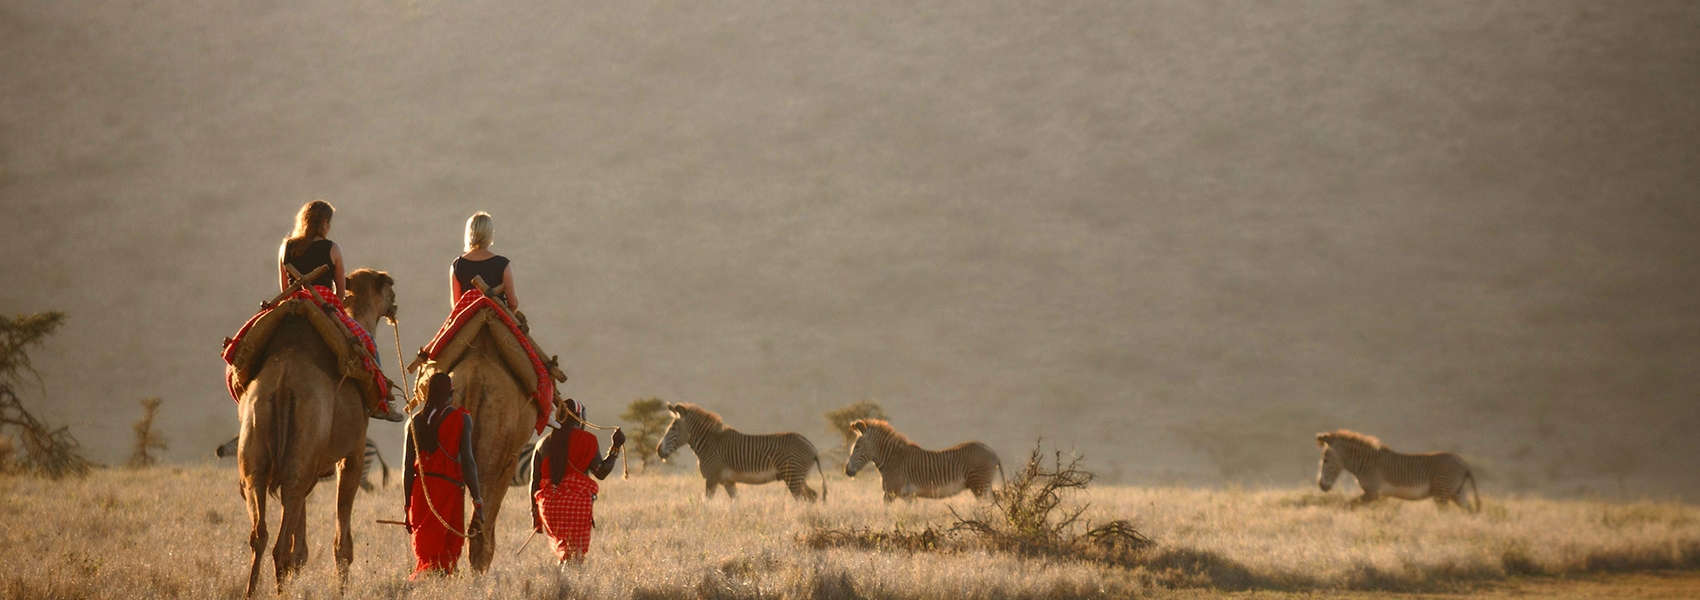 African Laikipia Plateau Safari camels